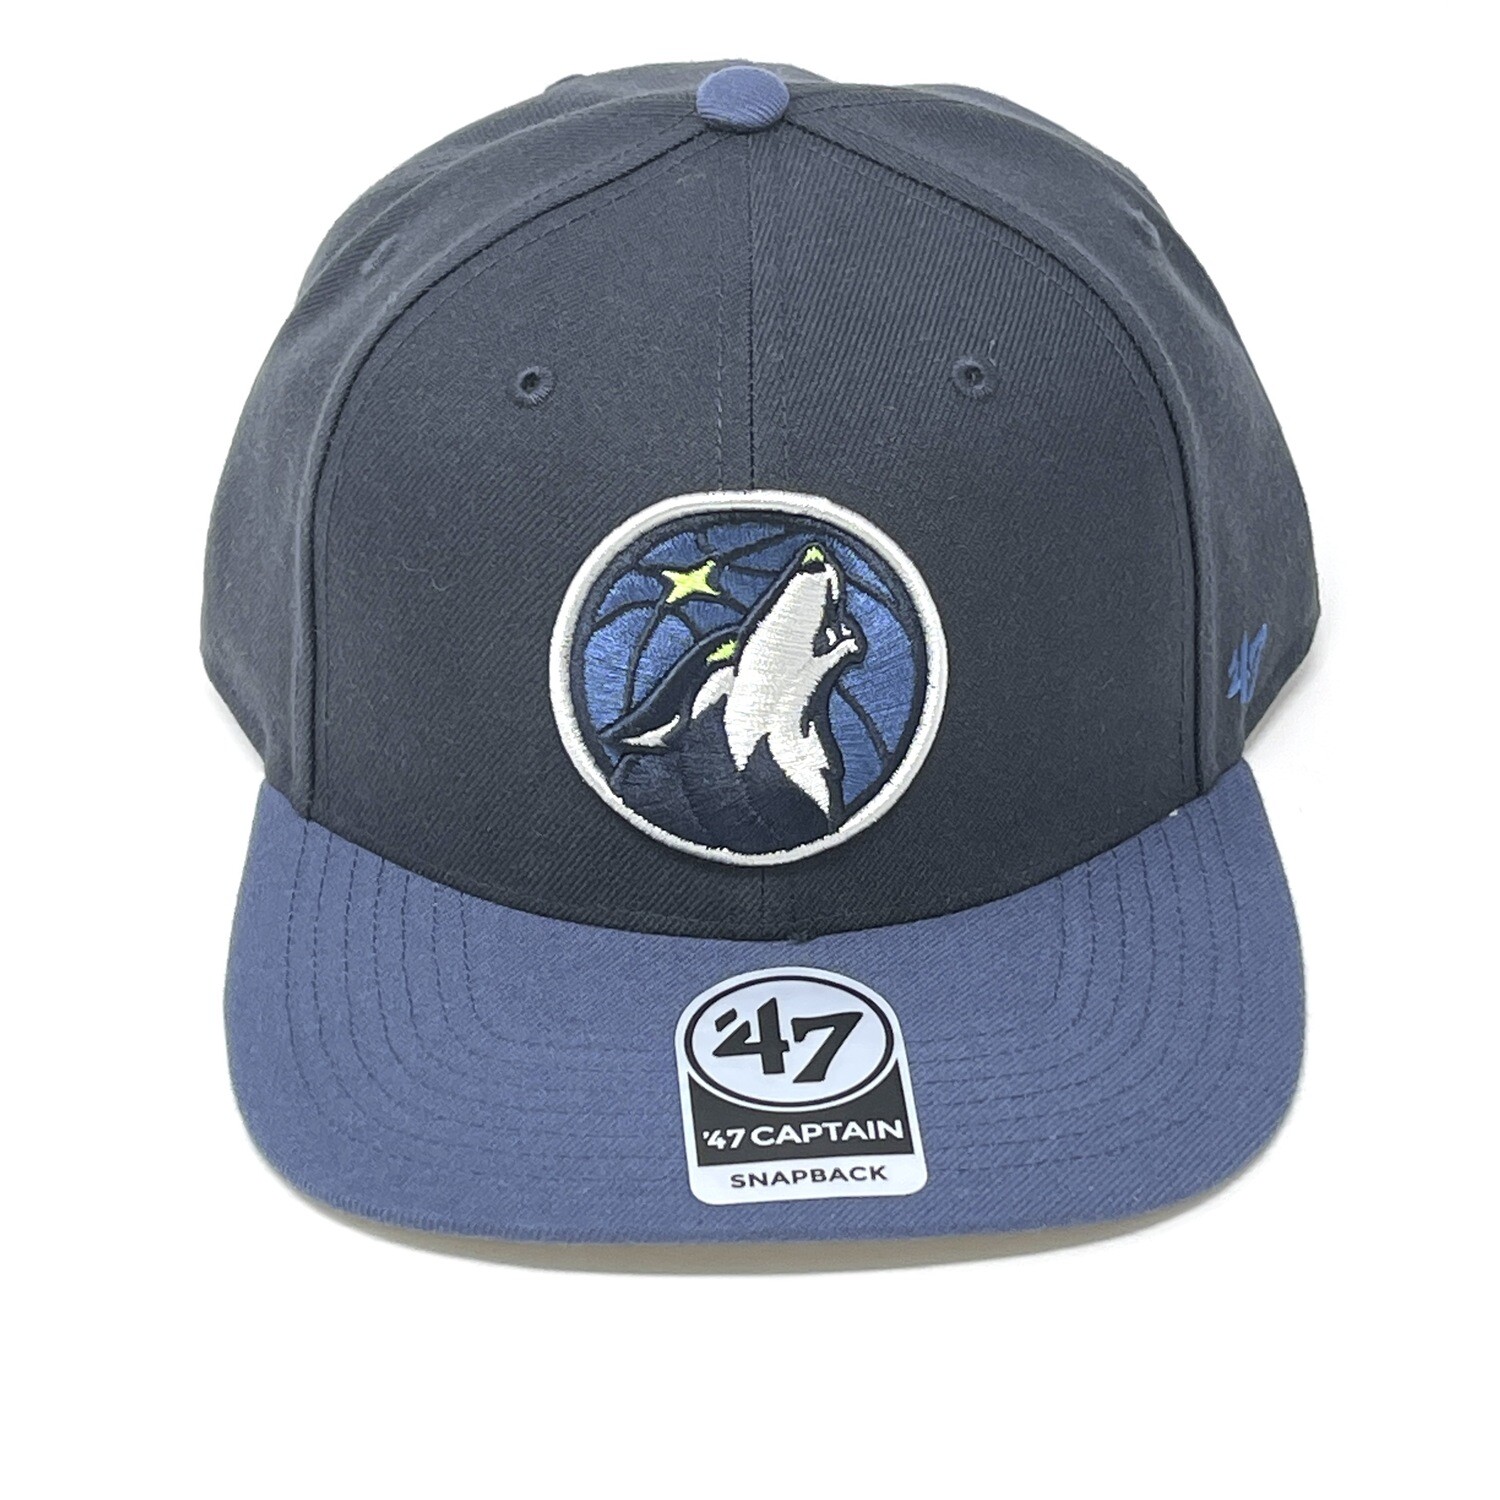 Men's '47 Blue Tampa Bay Lightning Captain Snapback Hat